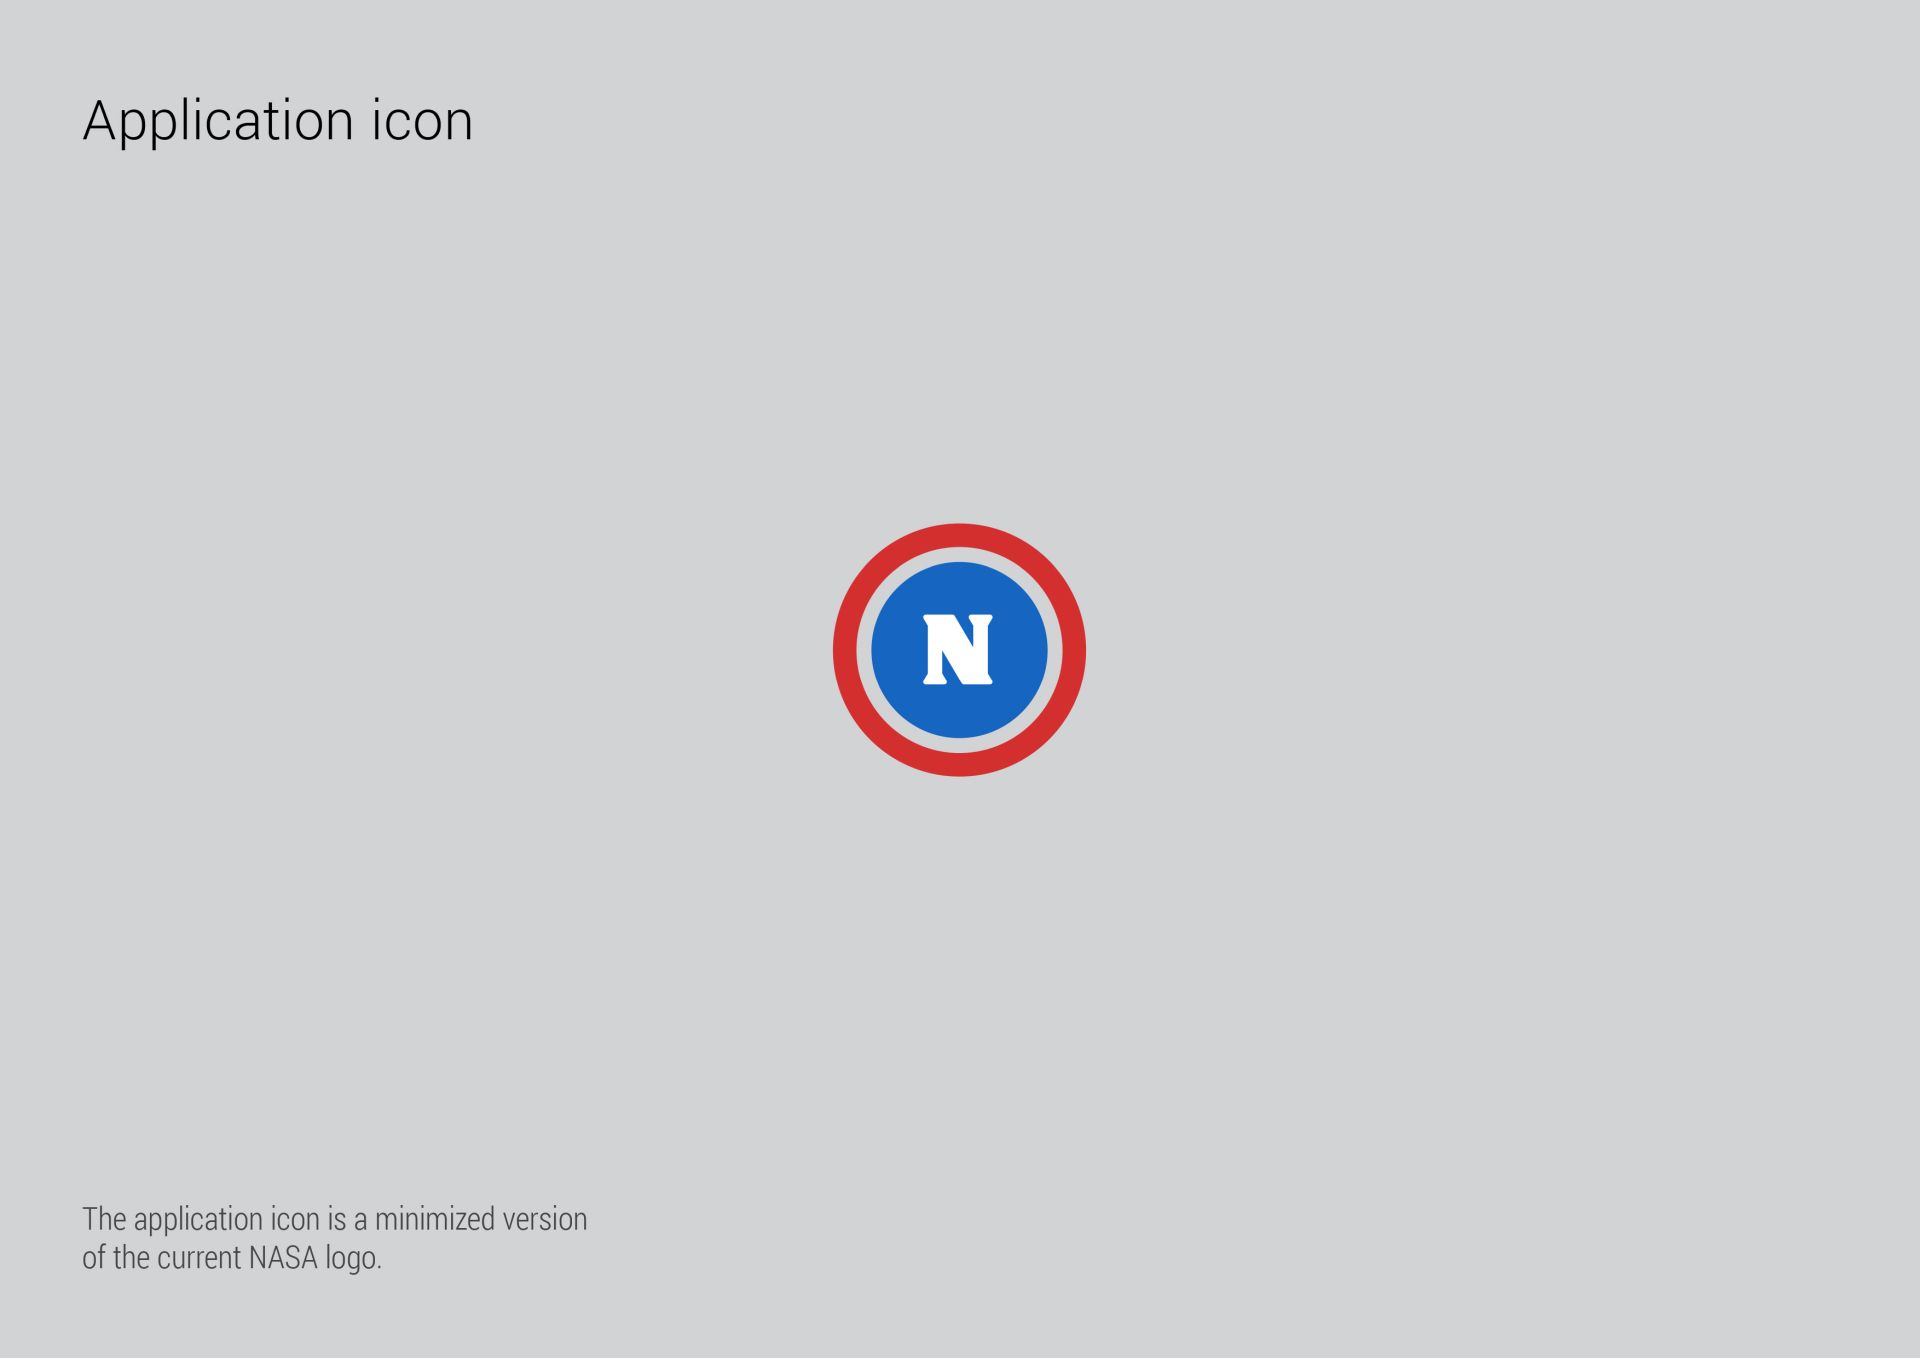 NASA android wear application icon